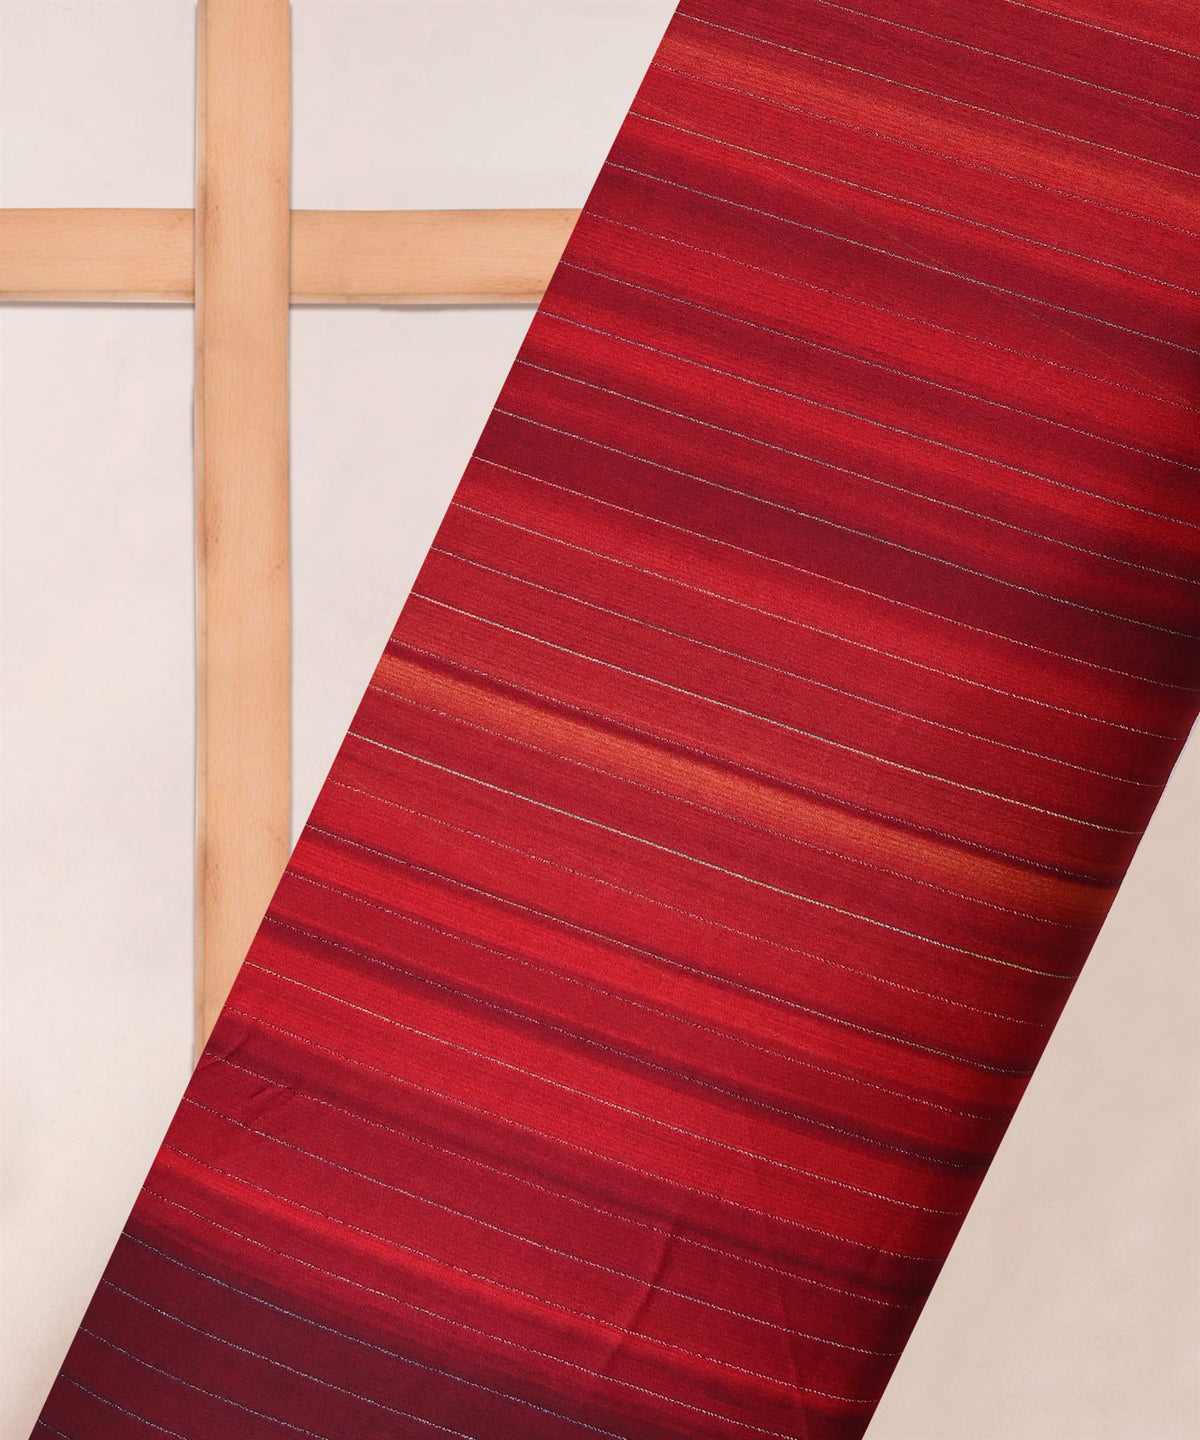 Red Shaded Chiffon Fabric with Zari Lining